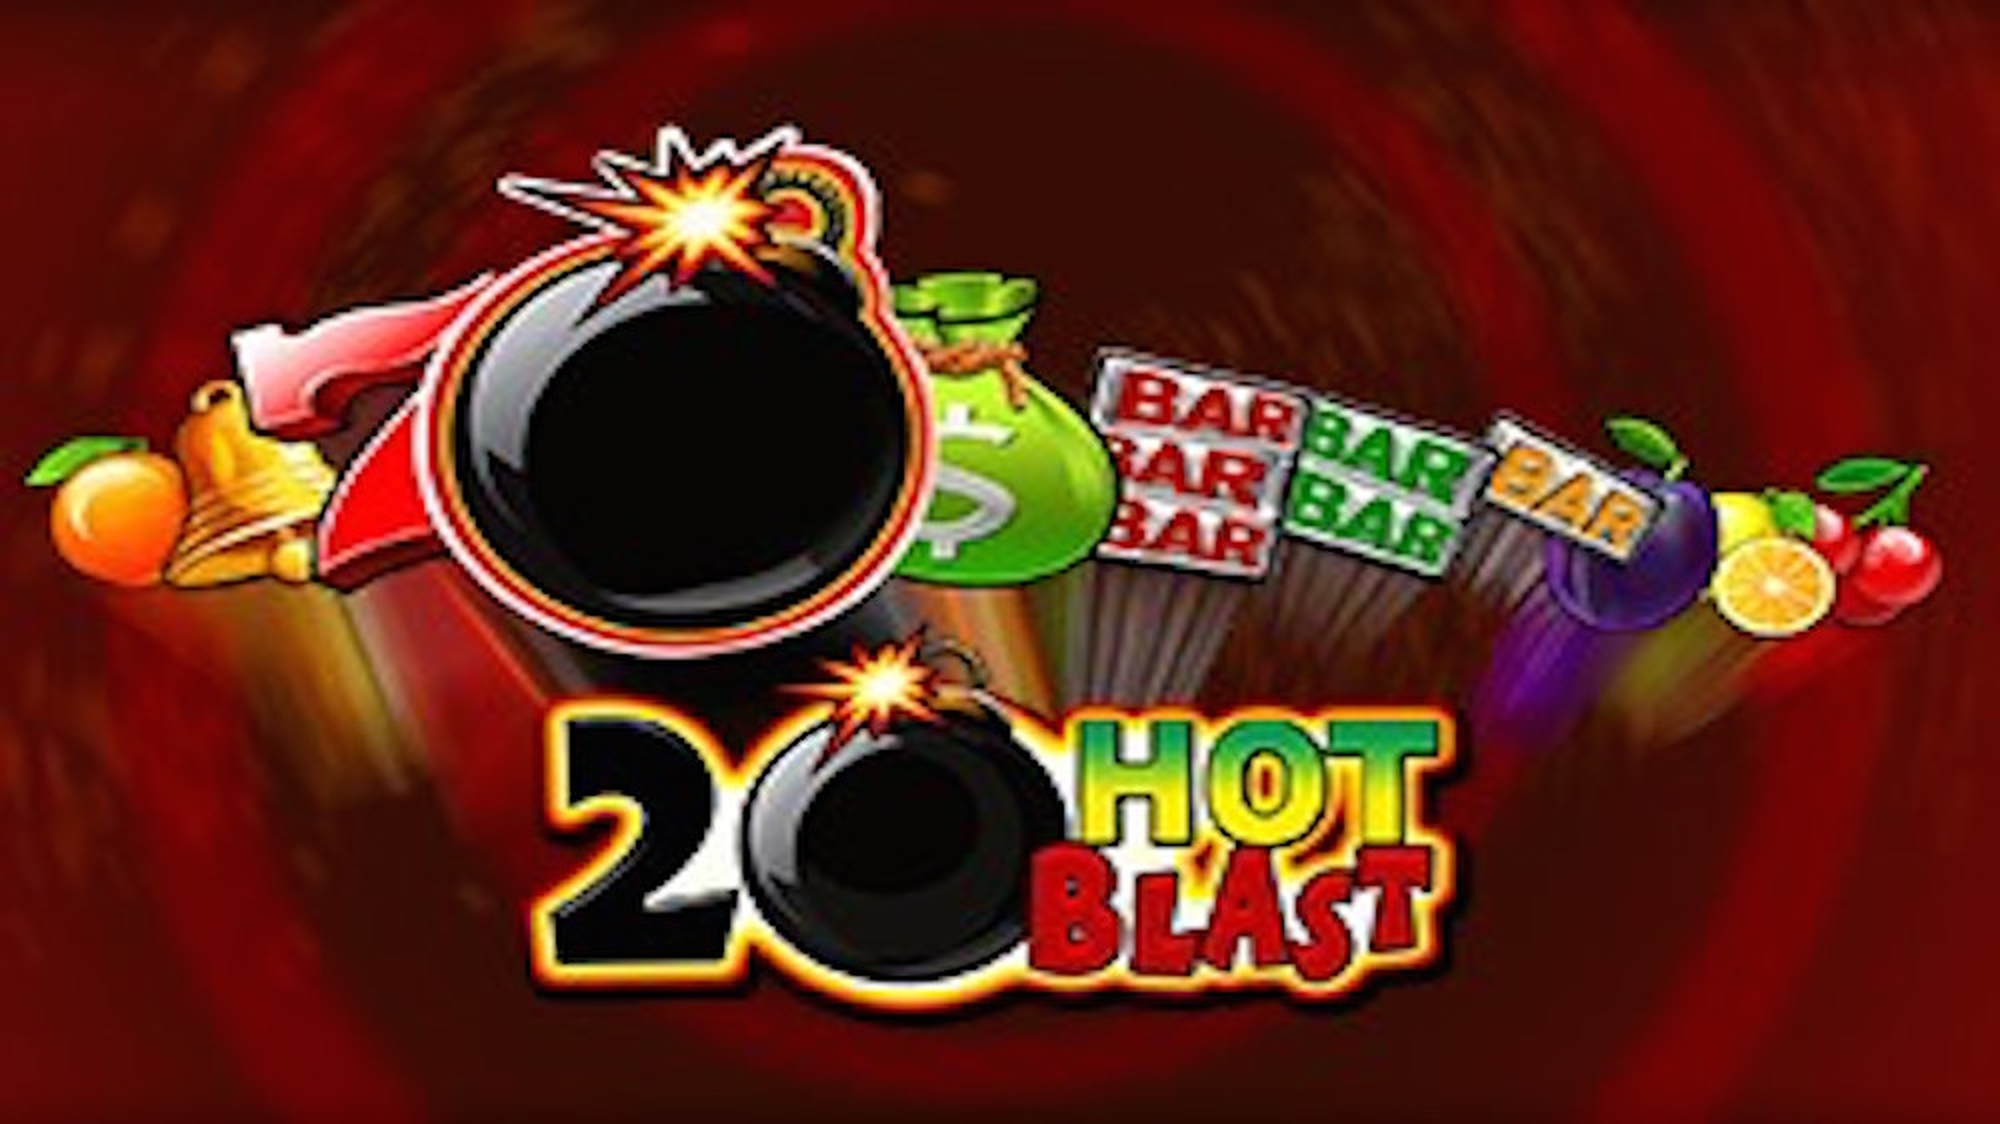 20 Hot Blast demo